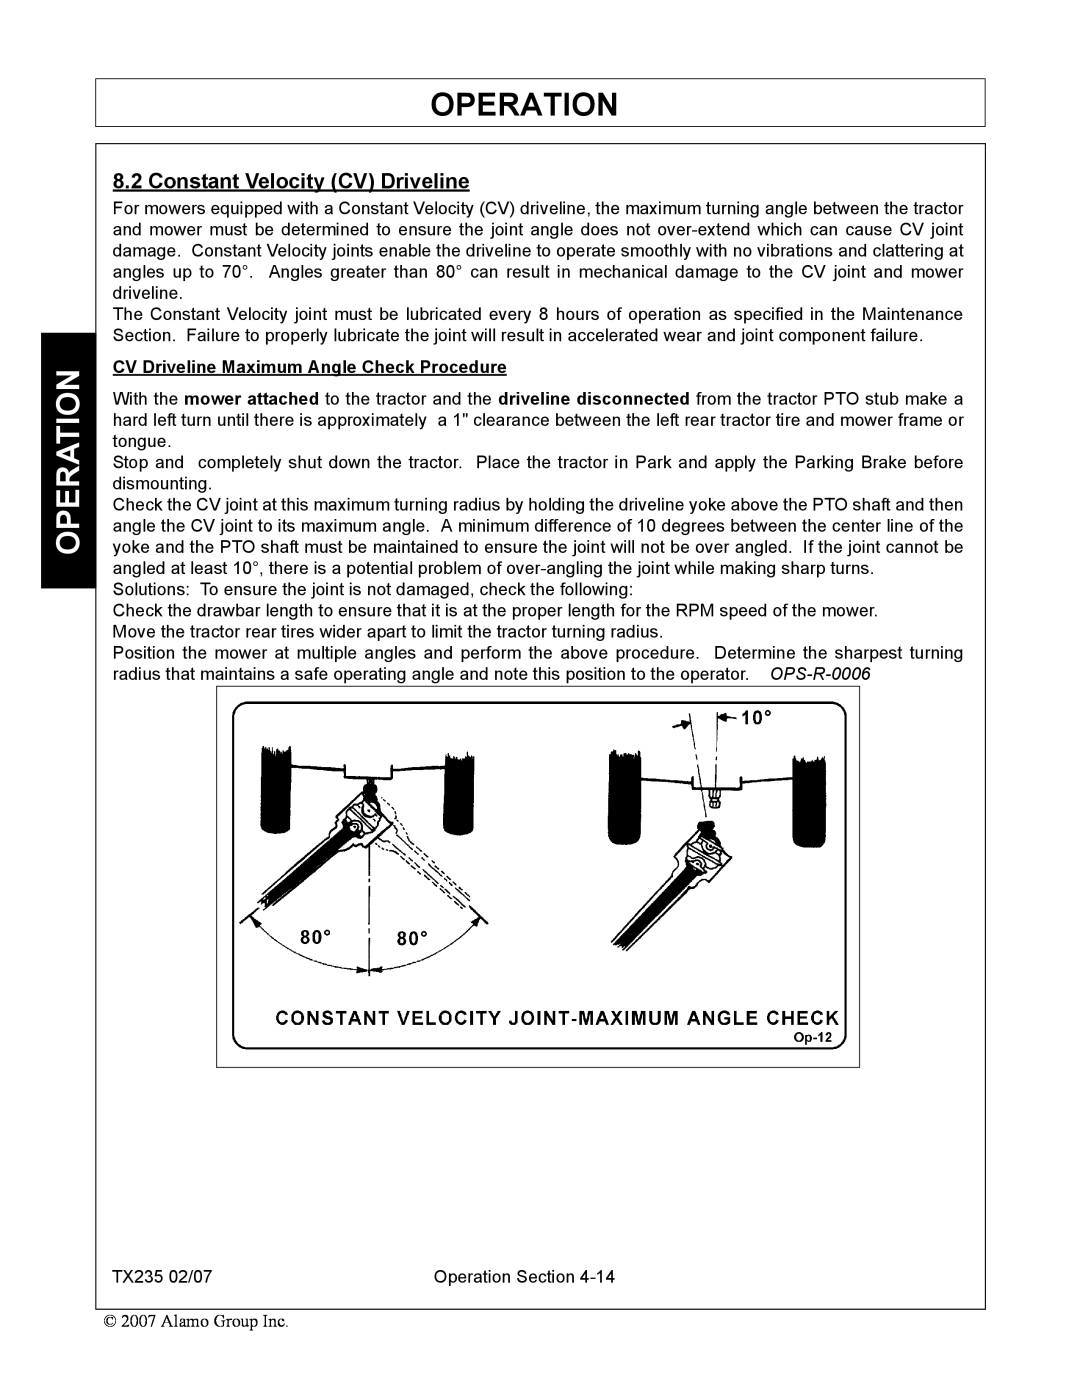 Alamo TX235 manual Constant Velocity CV Driveline, Operation, CV Driveline Maximum Angle Check Procedure 